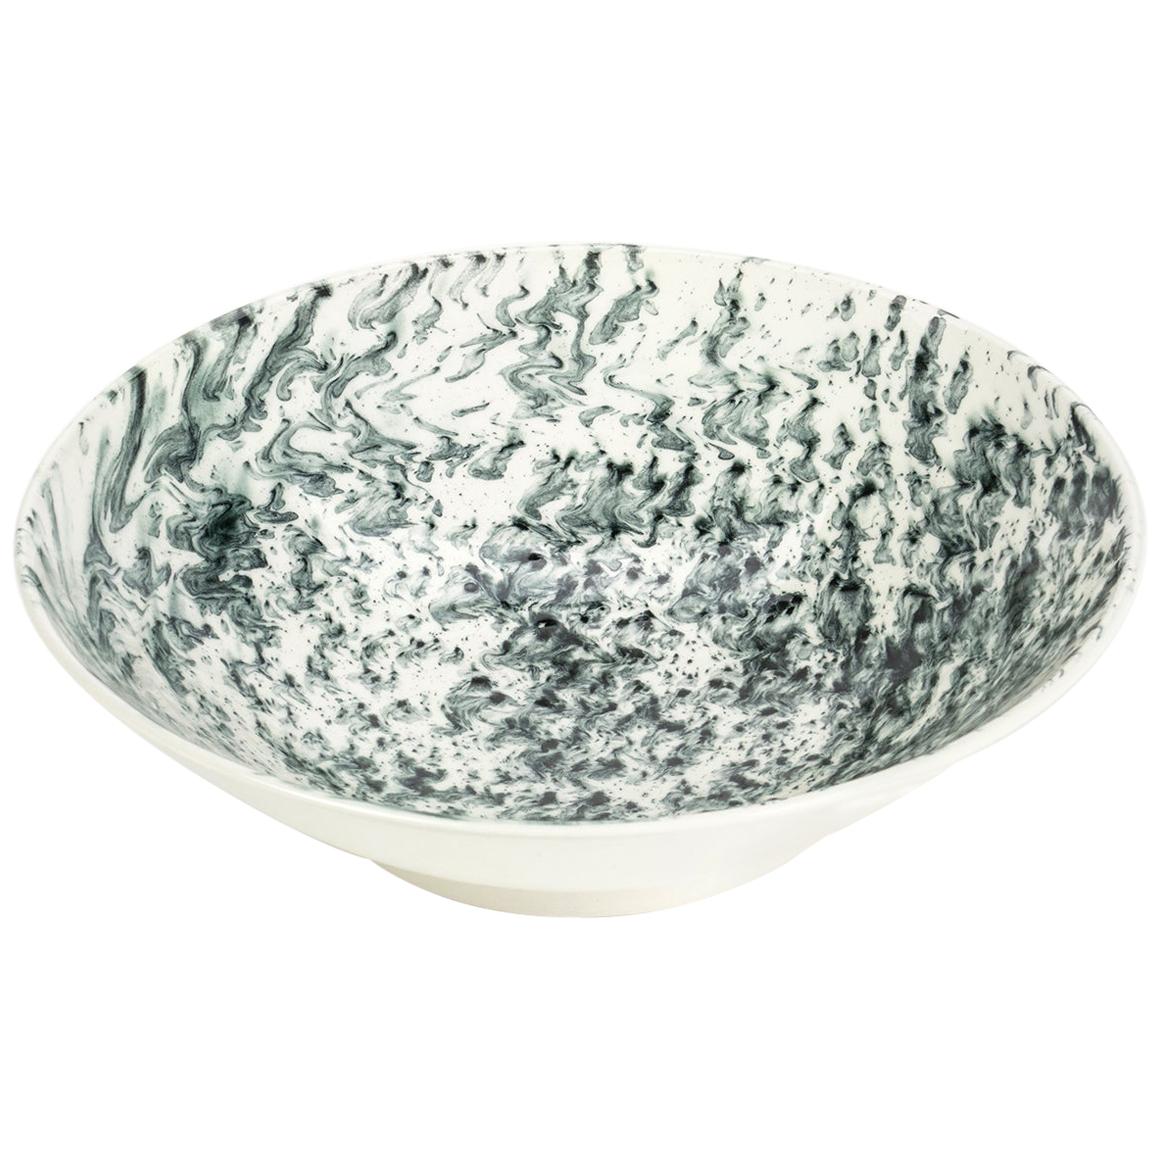 Hand Glazed Earthenware Medium Serving Bowl with Unique Contemporary Design